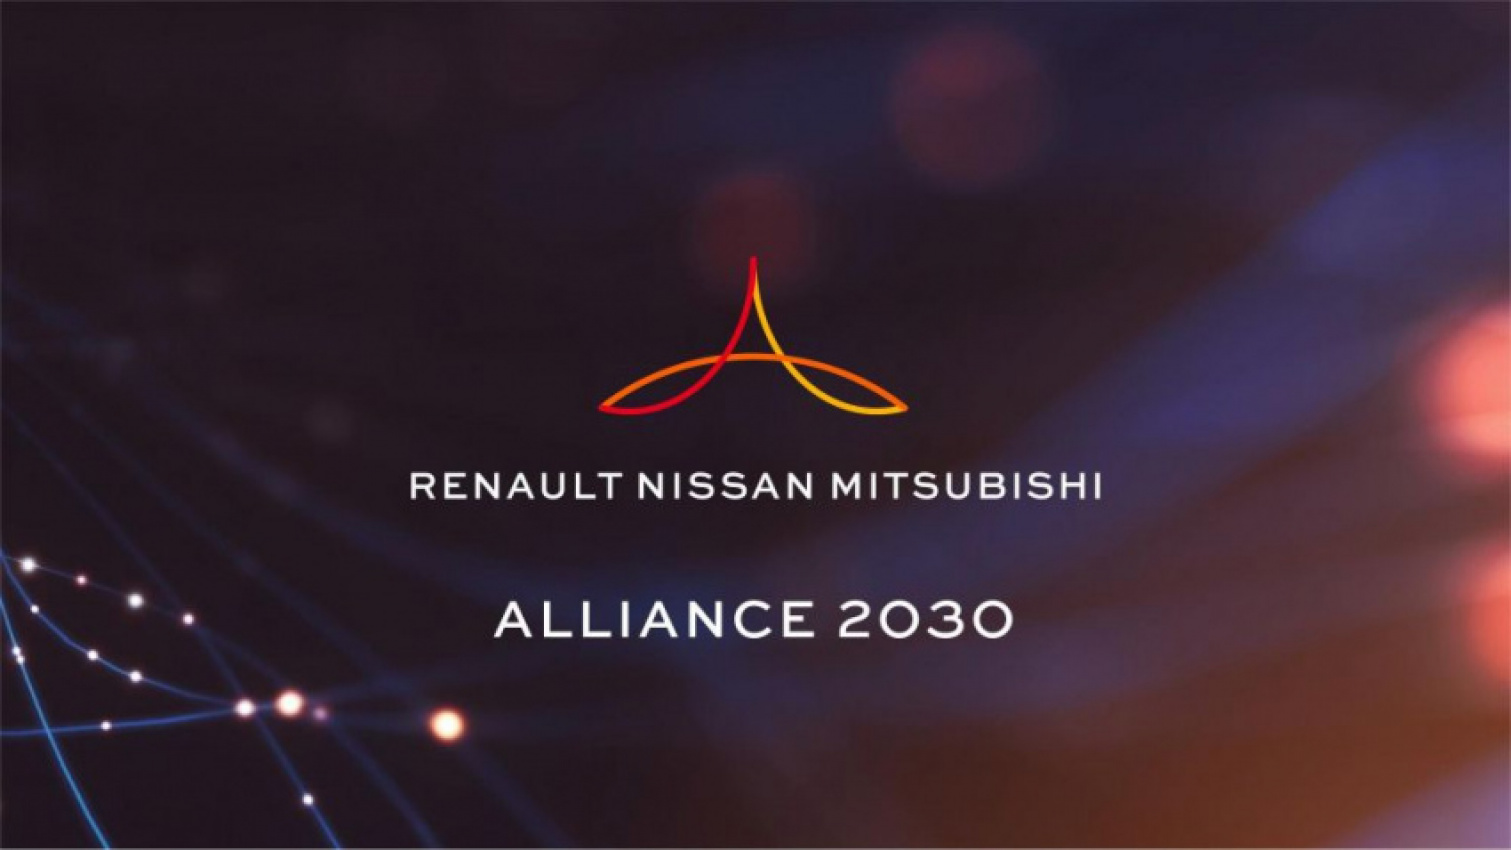 autos, cars, mitsubishi, nissan, renault, renault-nissan-mitsubishi present united front, share key plans